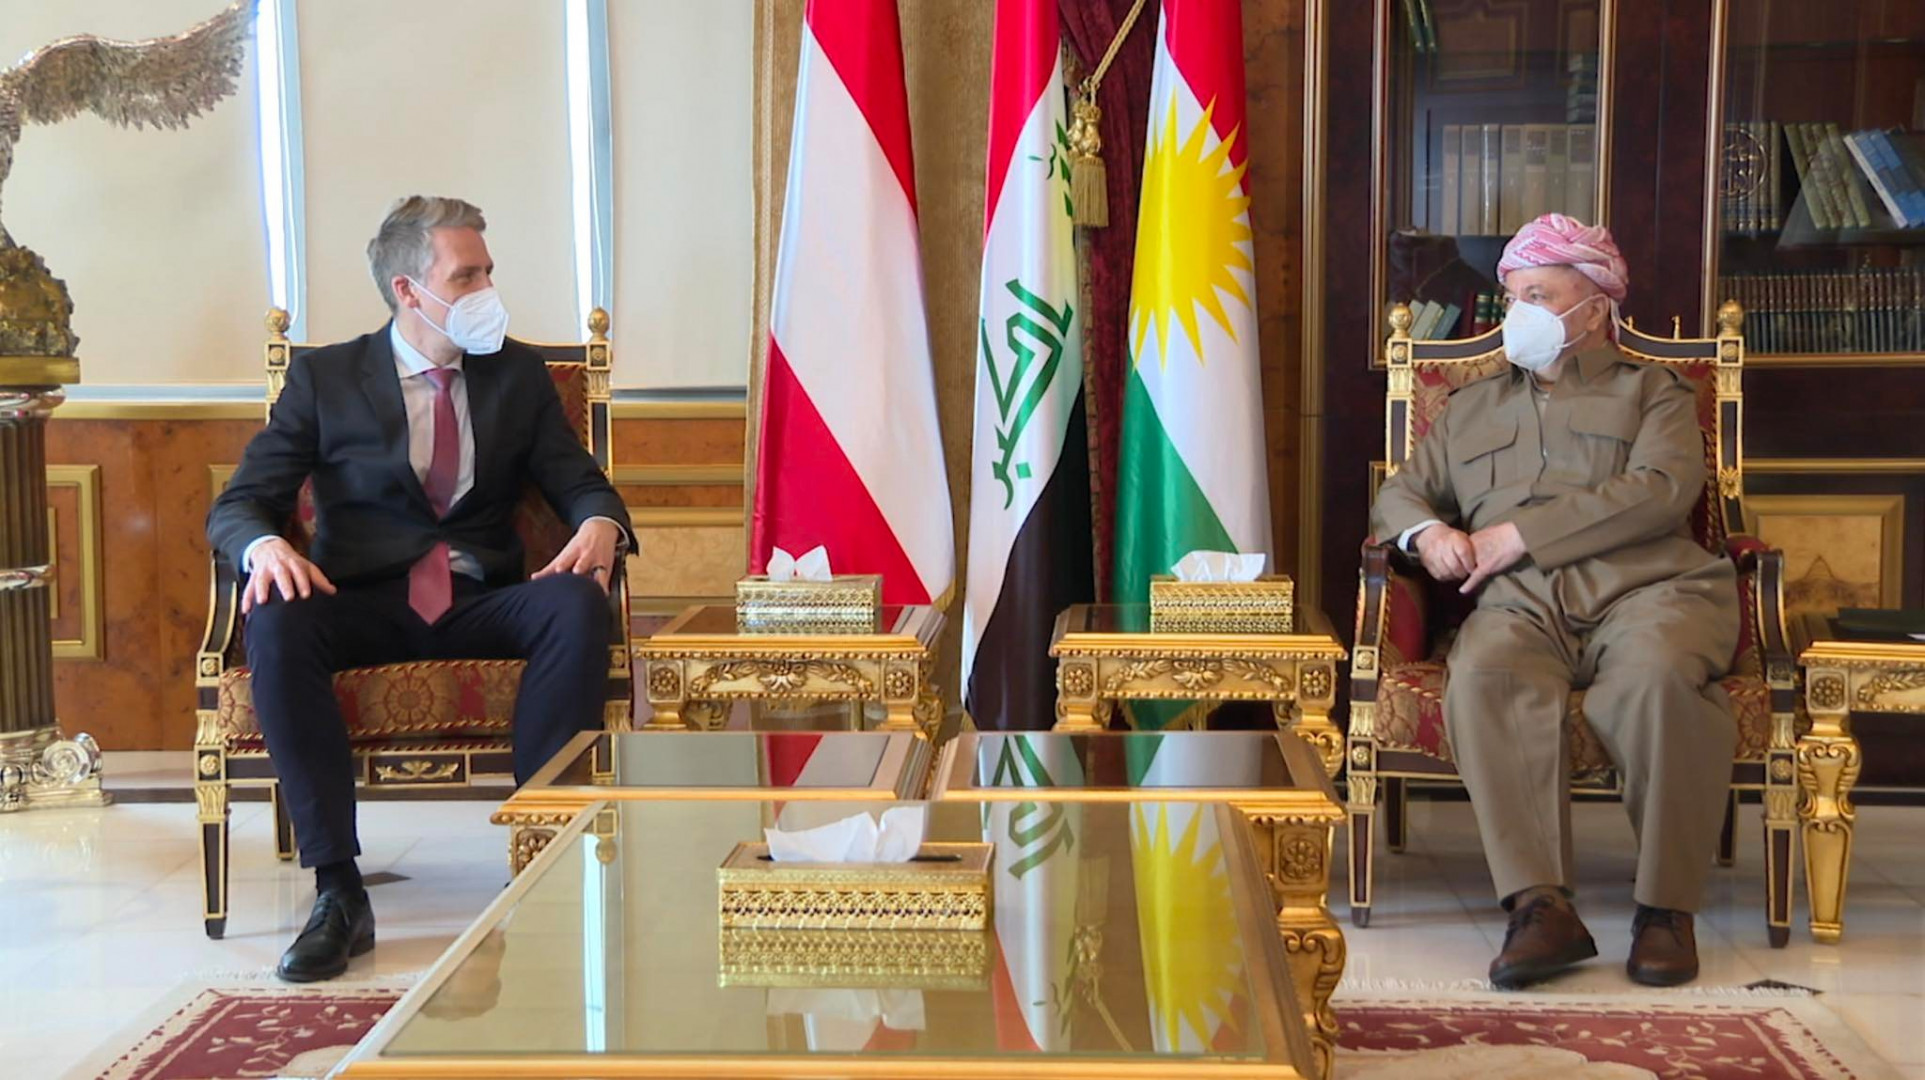 Austrian diplomatic delegation to Masoud Barzani: October election was a success 